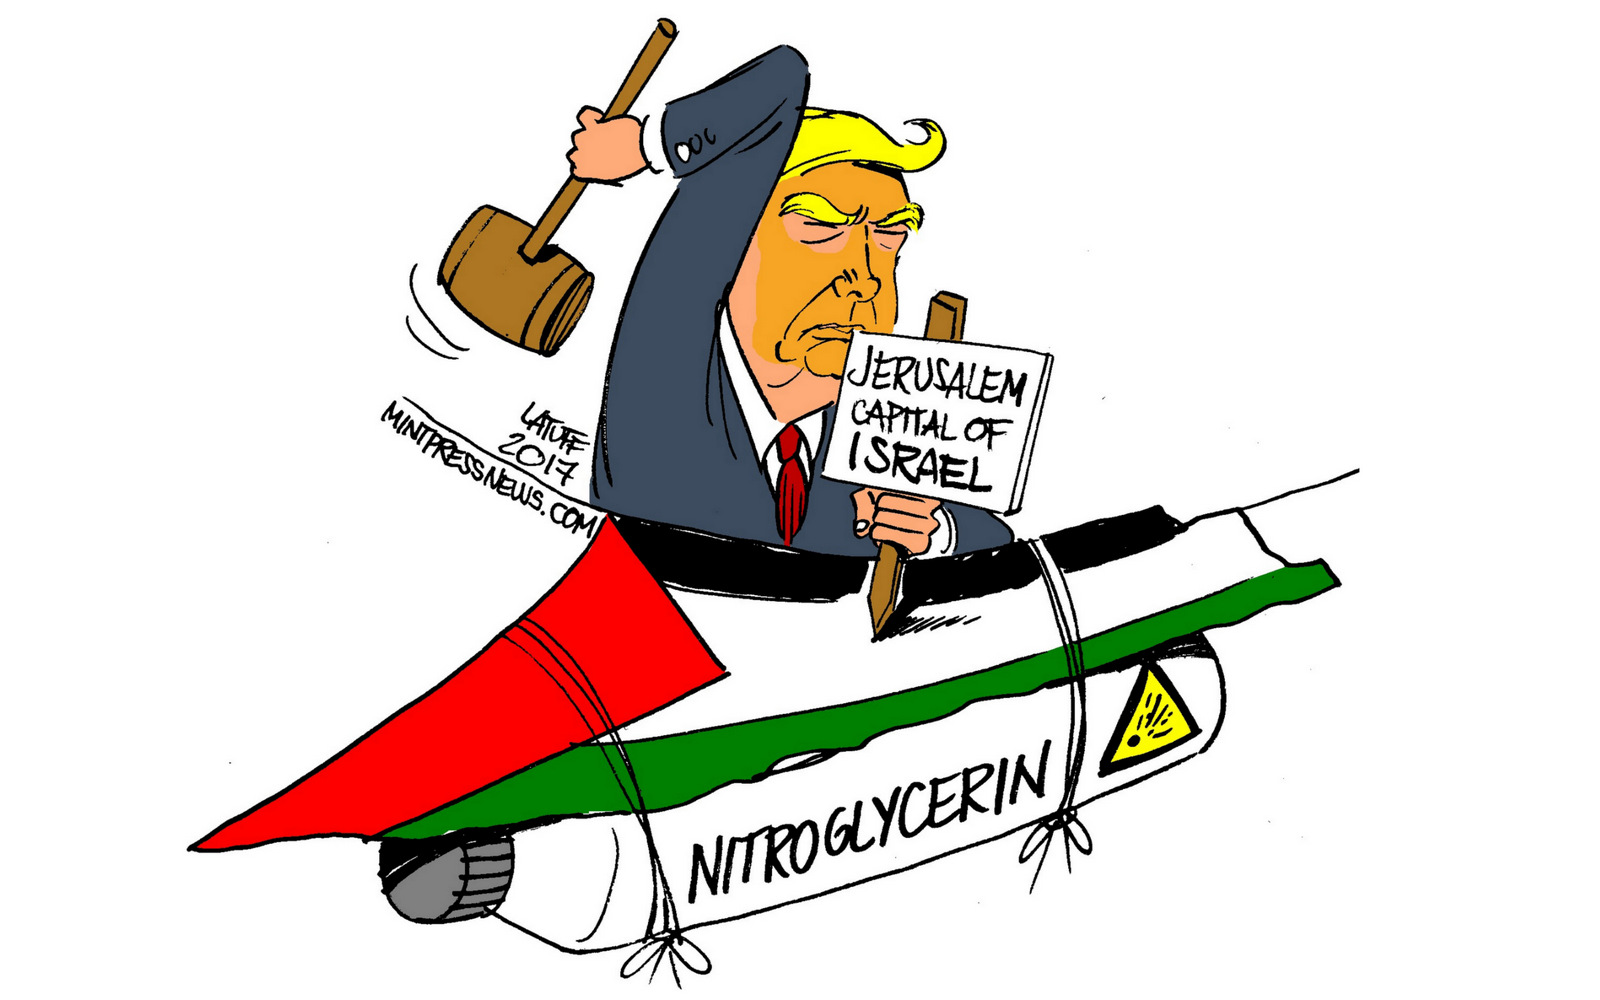 Donald Trump declares Jerusalem is the capital of Israel. Palestine statehood is no more. A MintPress News editorial cartoon by Carlos Latuff.